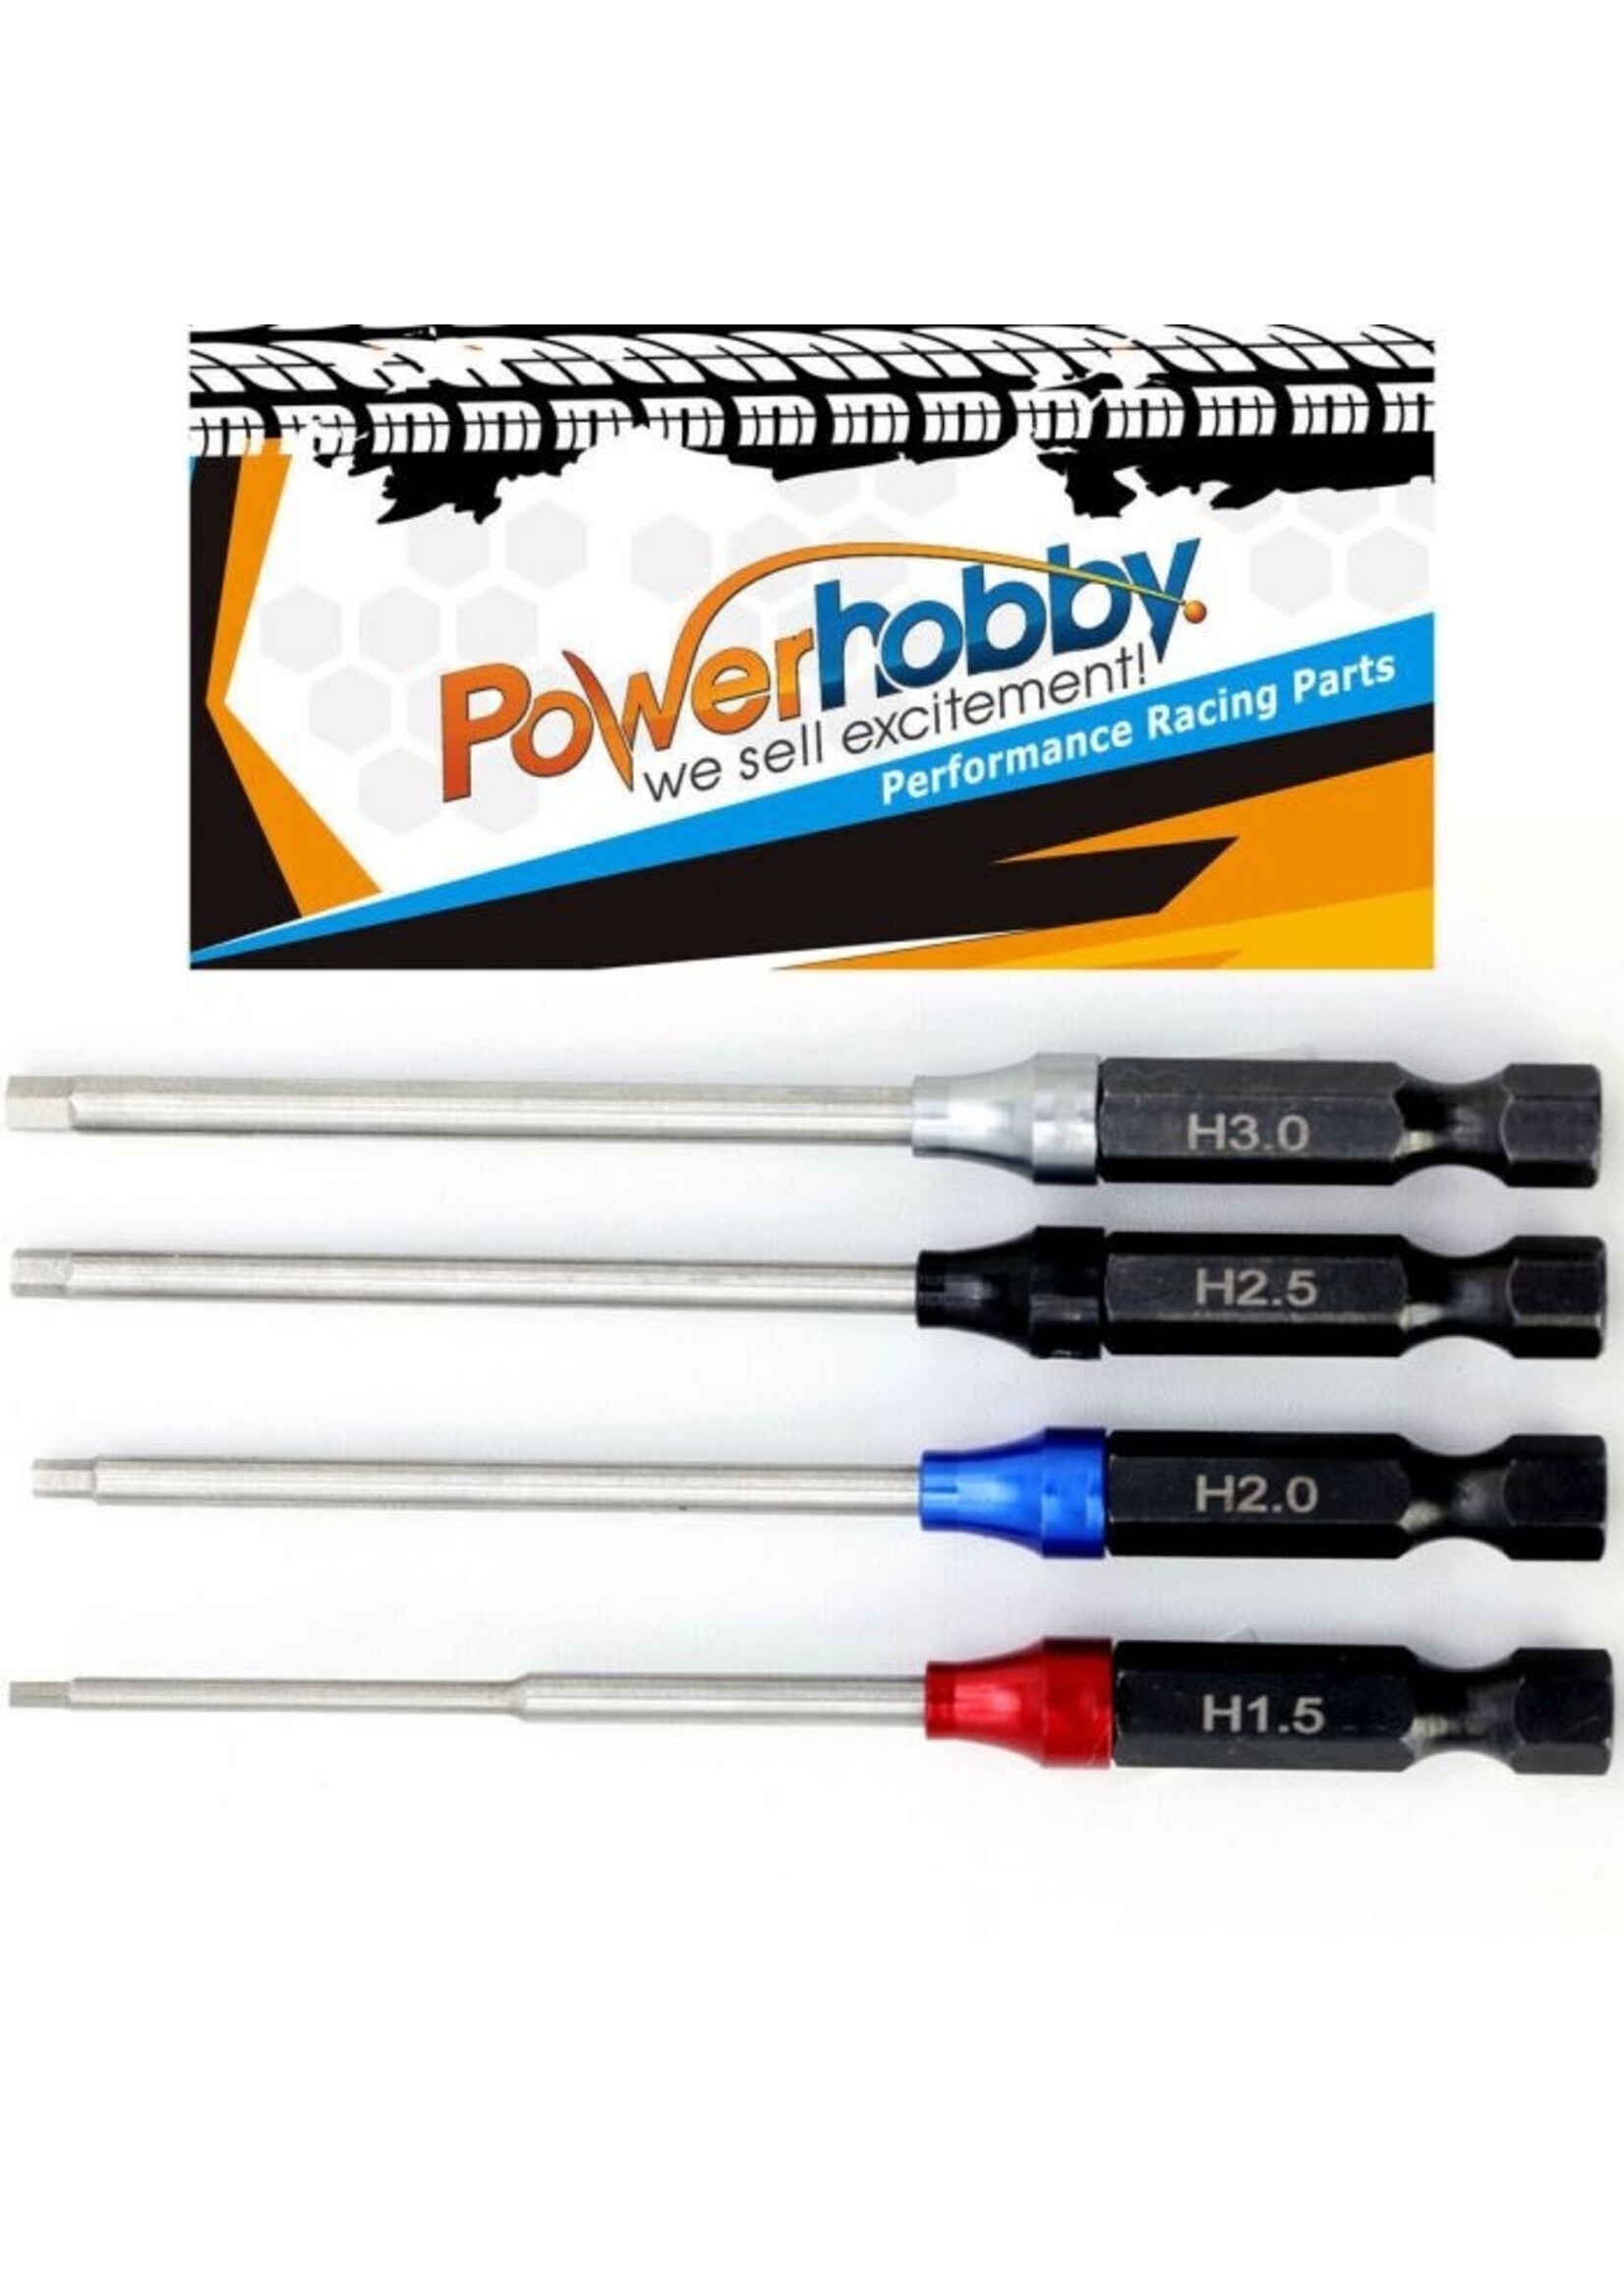 Power Hobby PHT006 Powerhobby RC Hex Driver 1/4" Power Tool Set Metric 1.5, 2.0, 2.5, 3.0mm